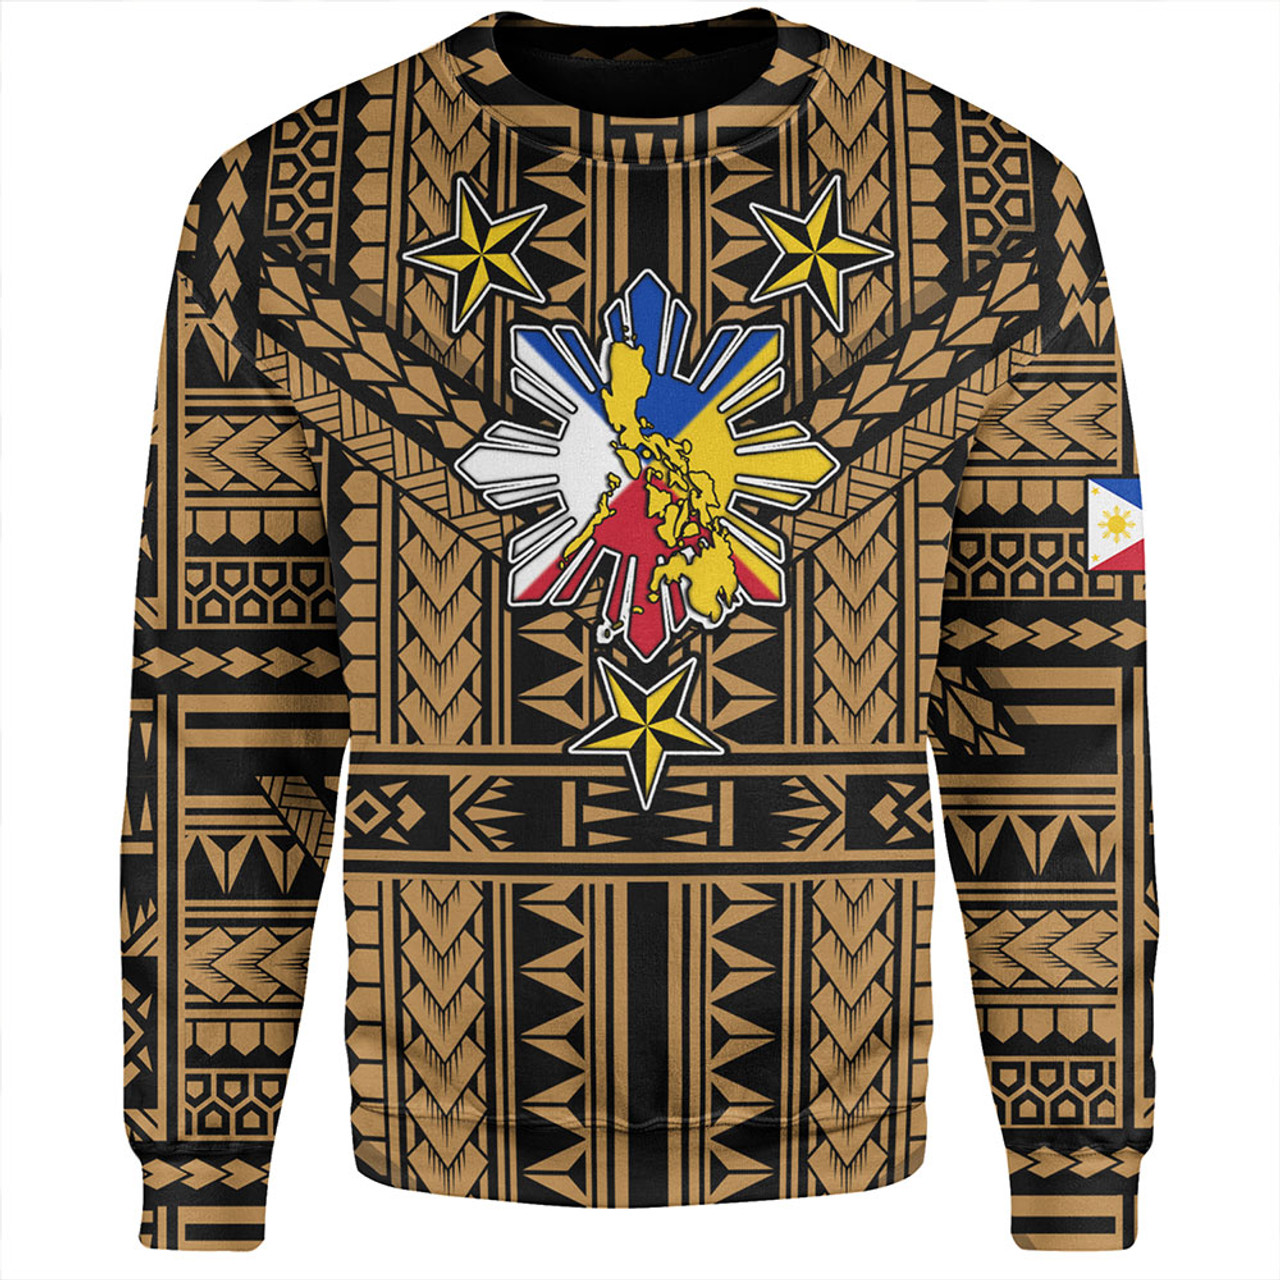 Philippines Sweatshirt - Filipino Sun And Stars Tribal Tattoo Patterns Style